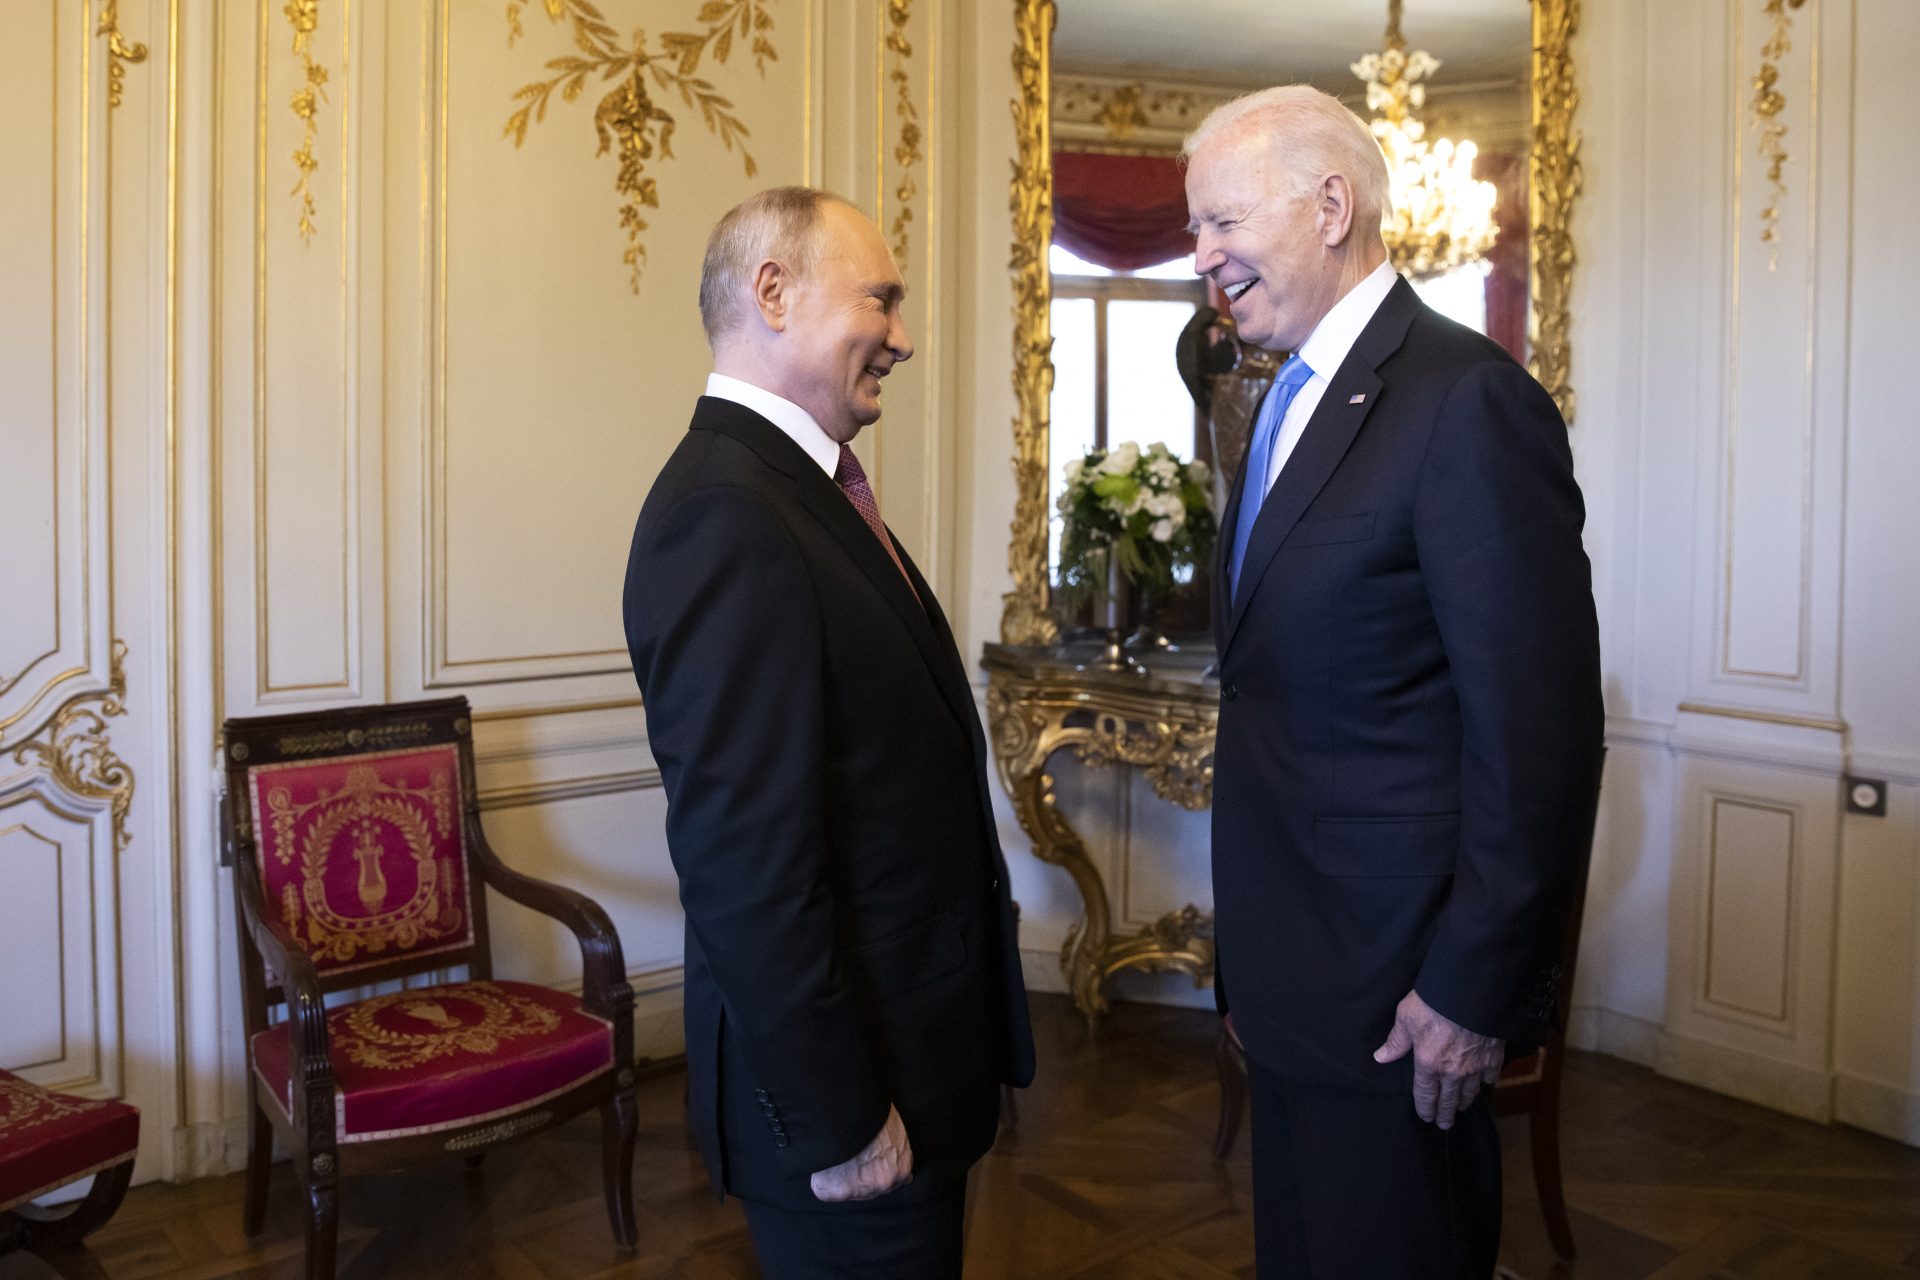 Putin defended Biden's cognitive health